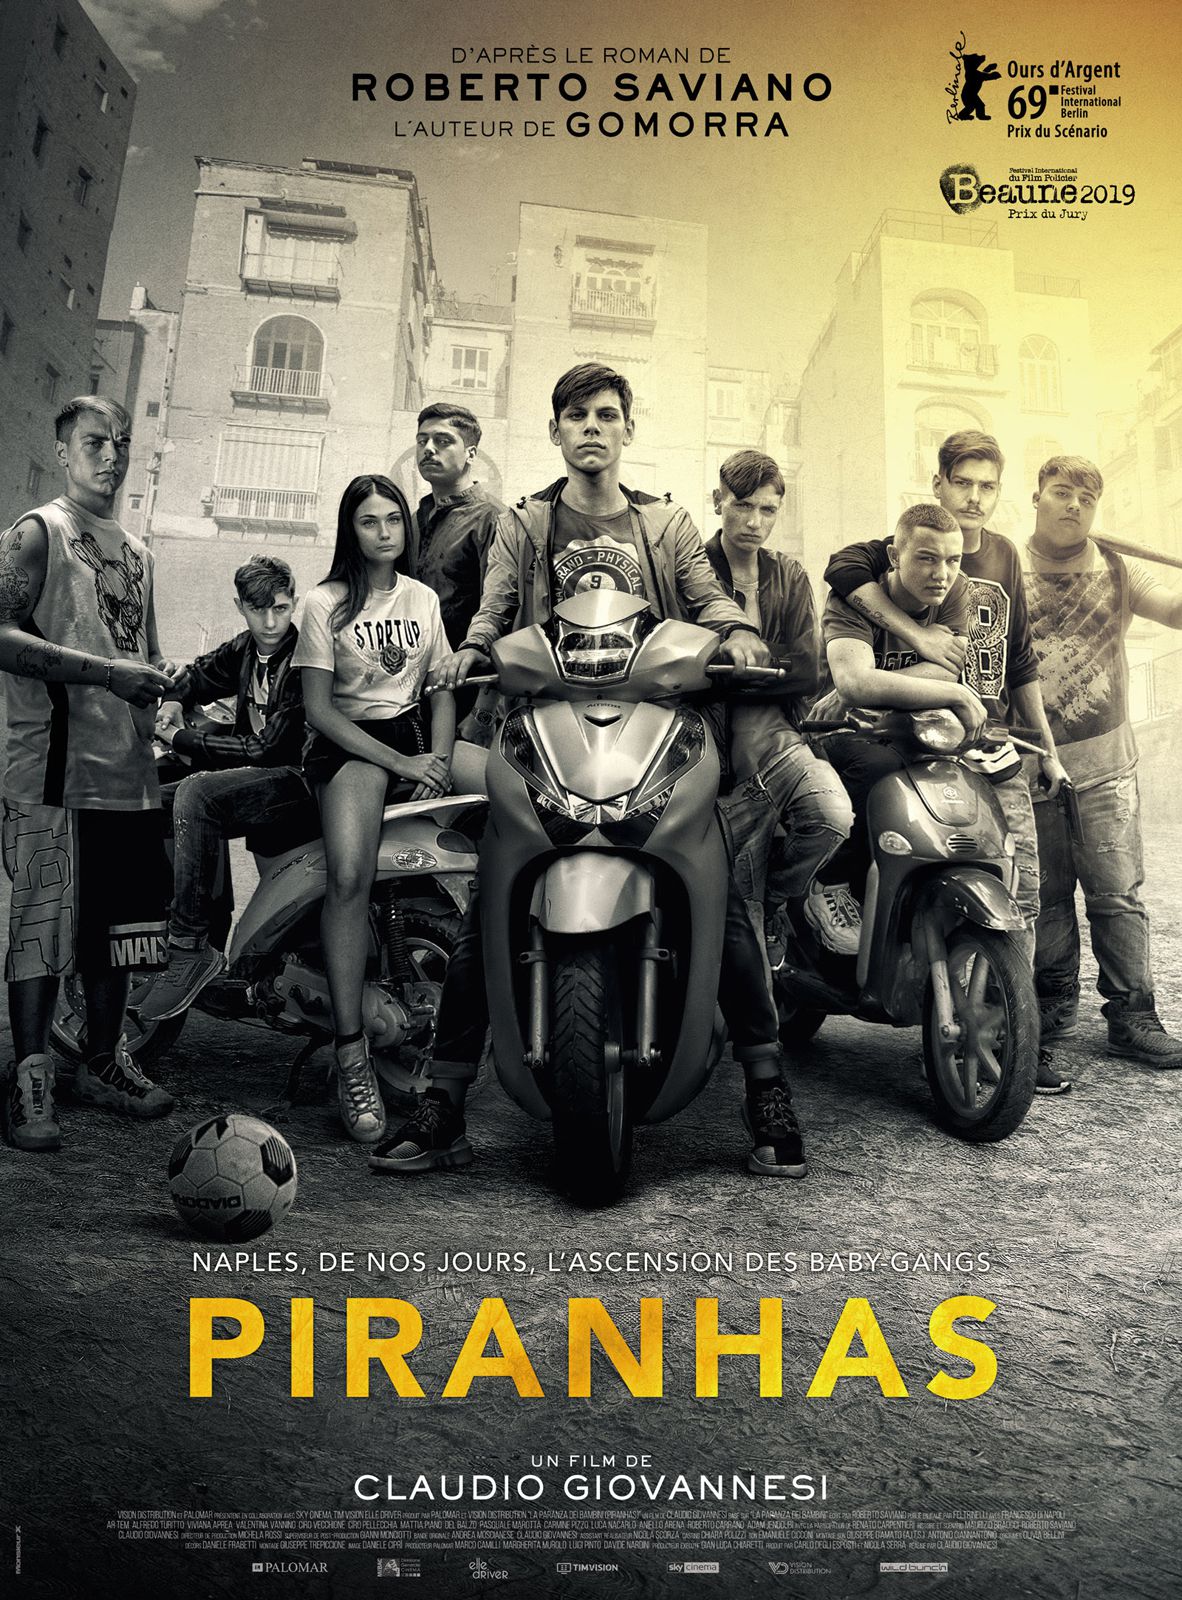 Piranhas - Film (2019) streaming VF gratuit complet